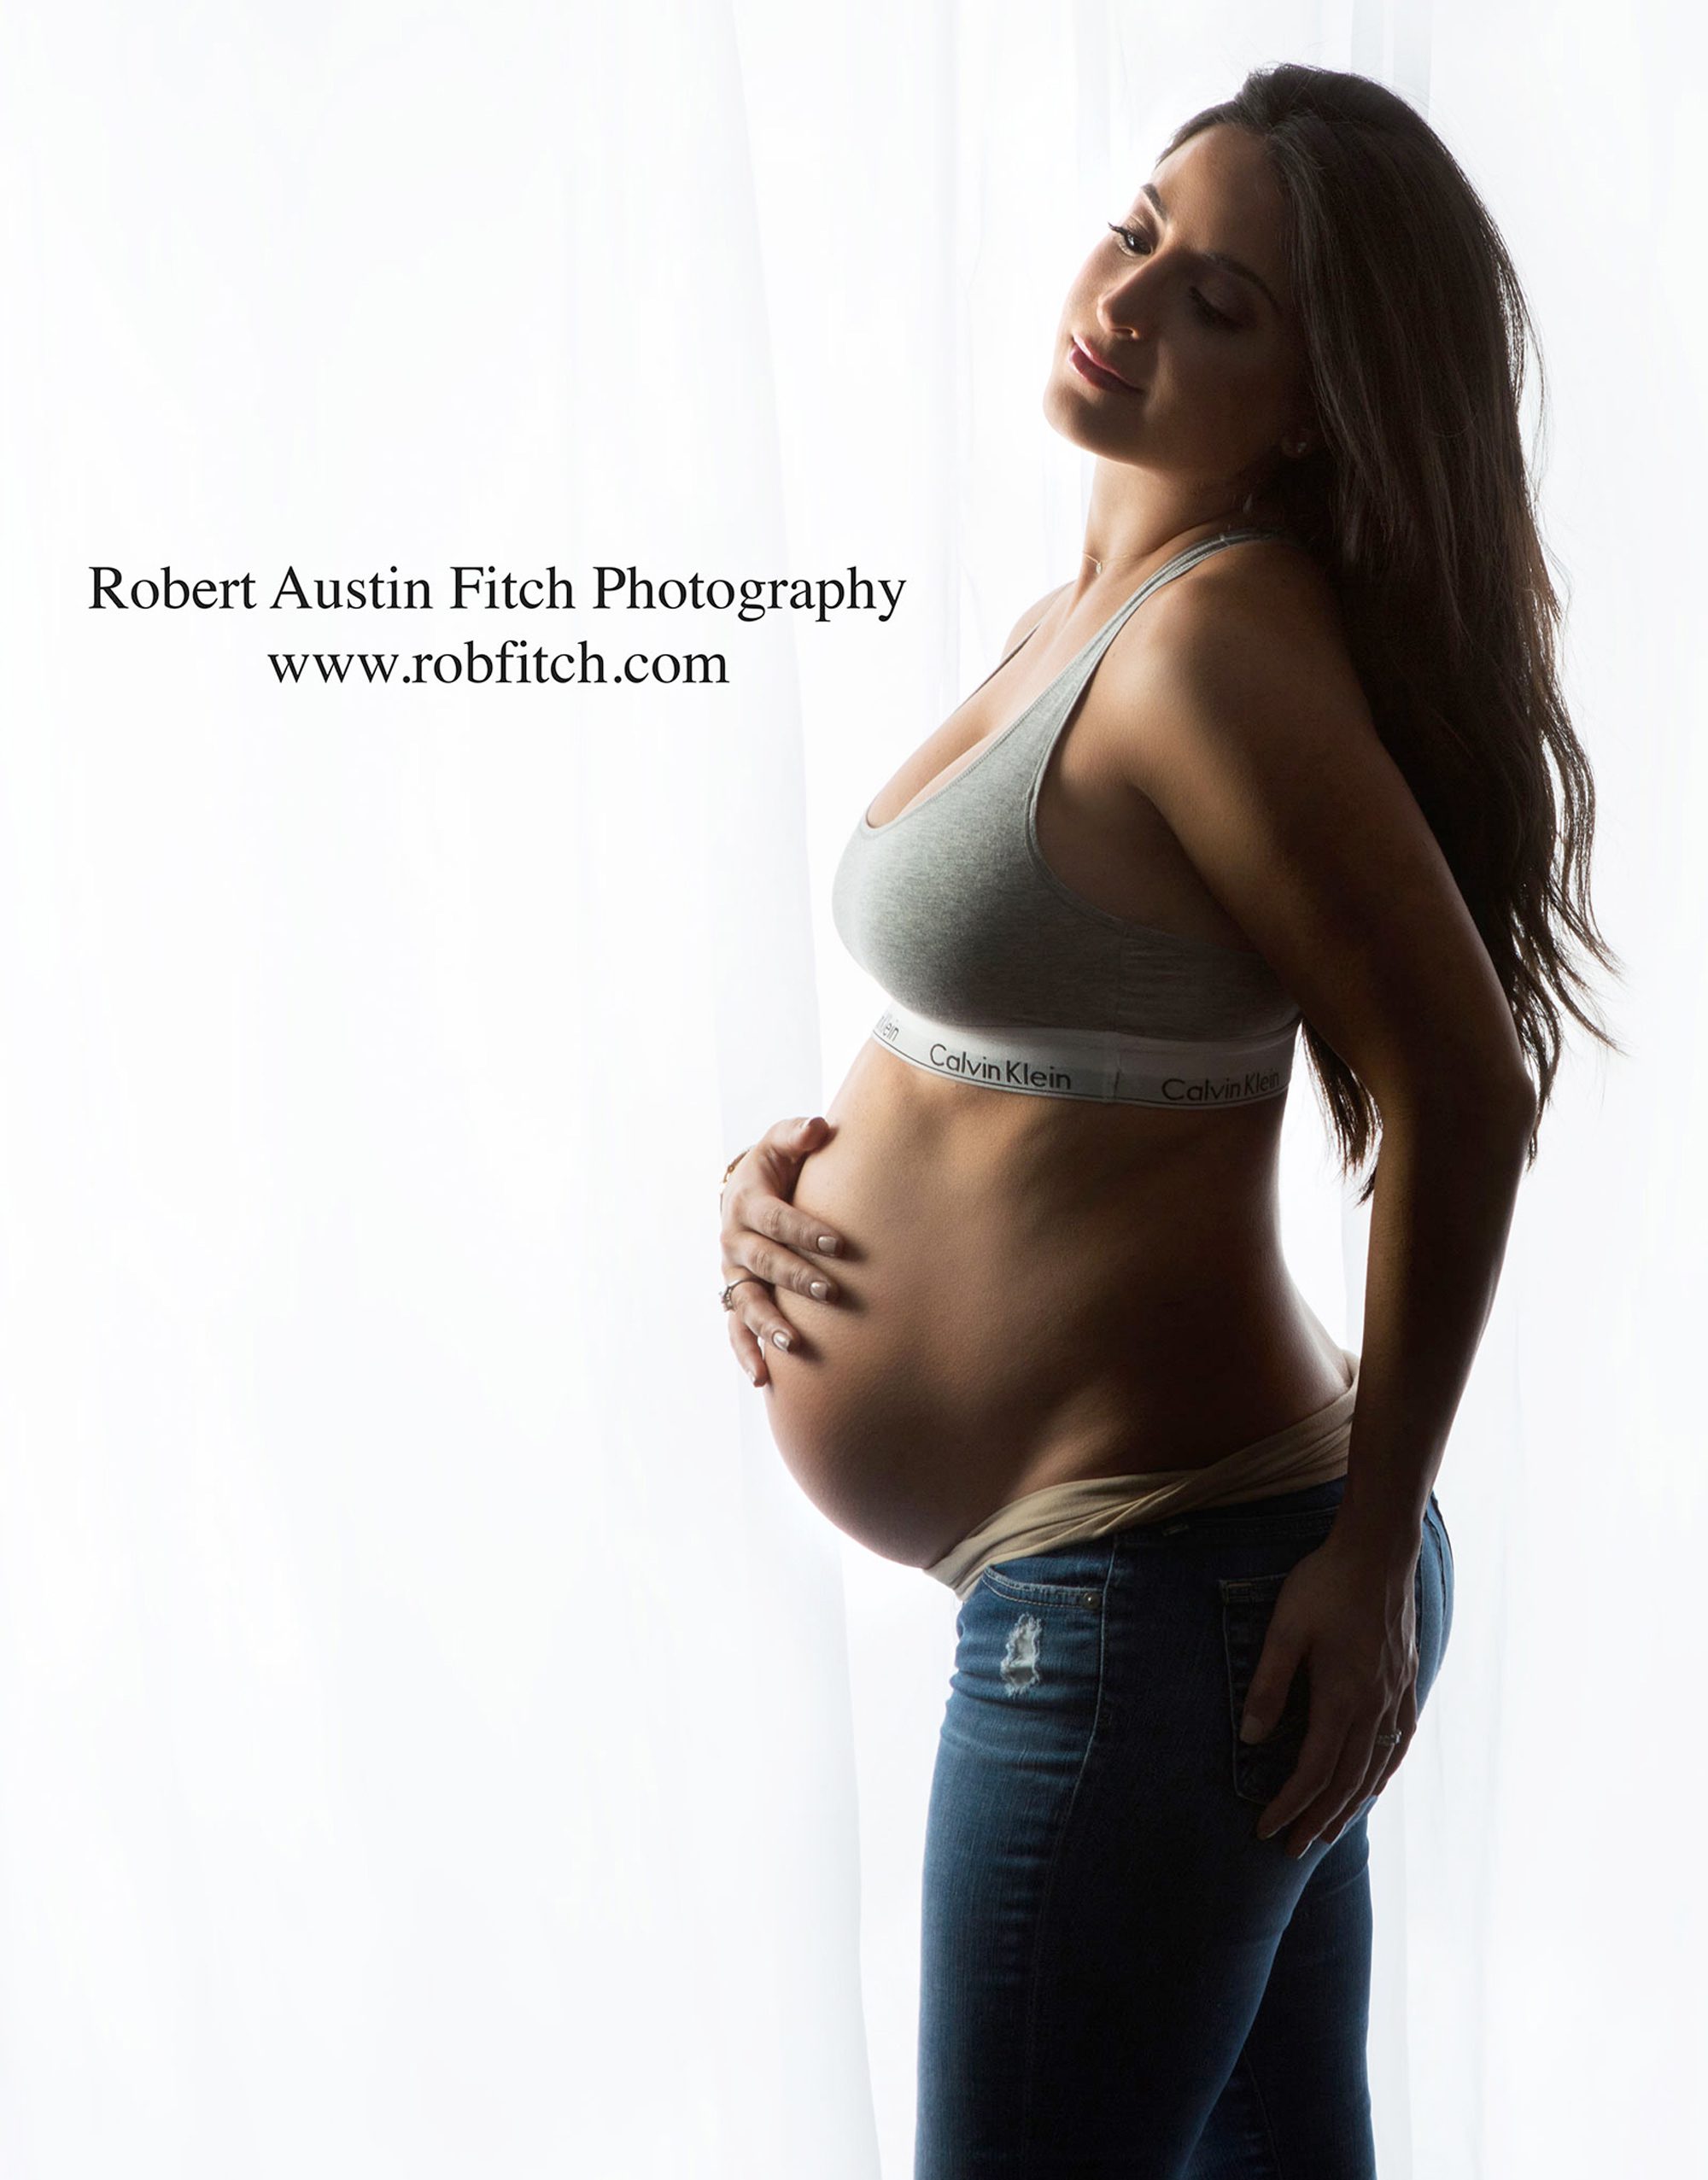 Silhouette photo of pregnant woman in jeans & a Calvin Klein sports bra